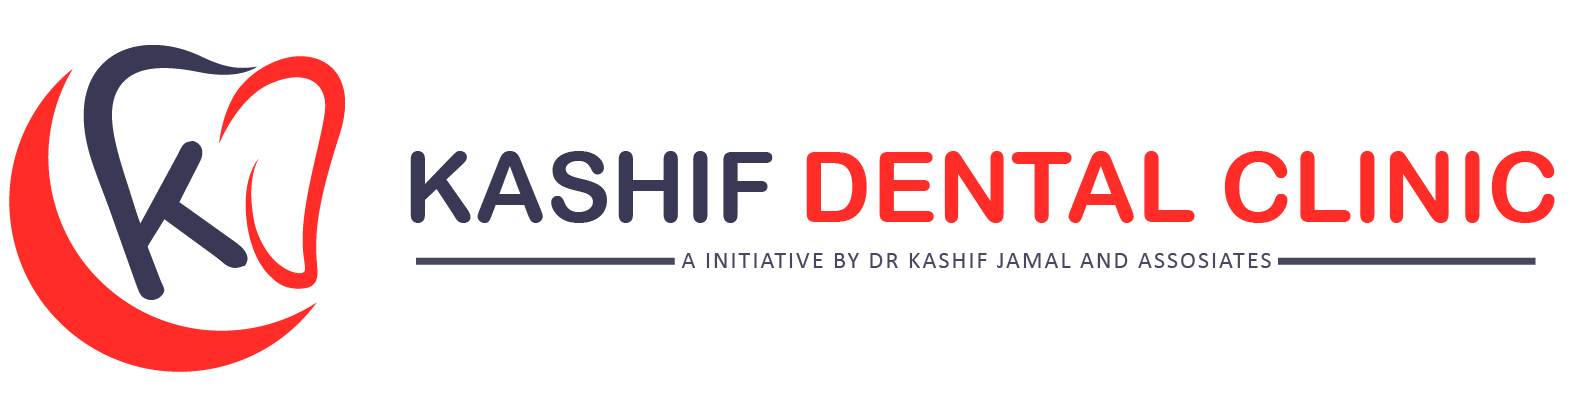 Kashif Dental Clinic